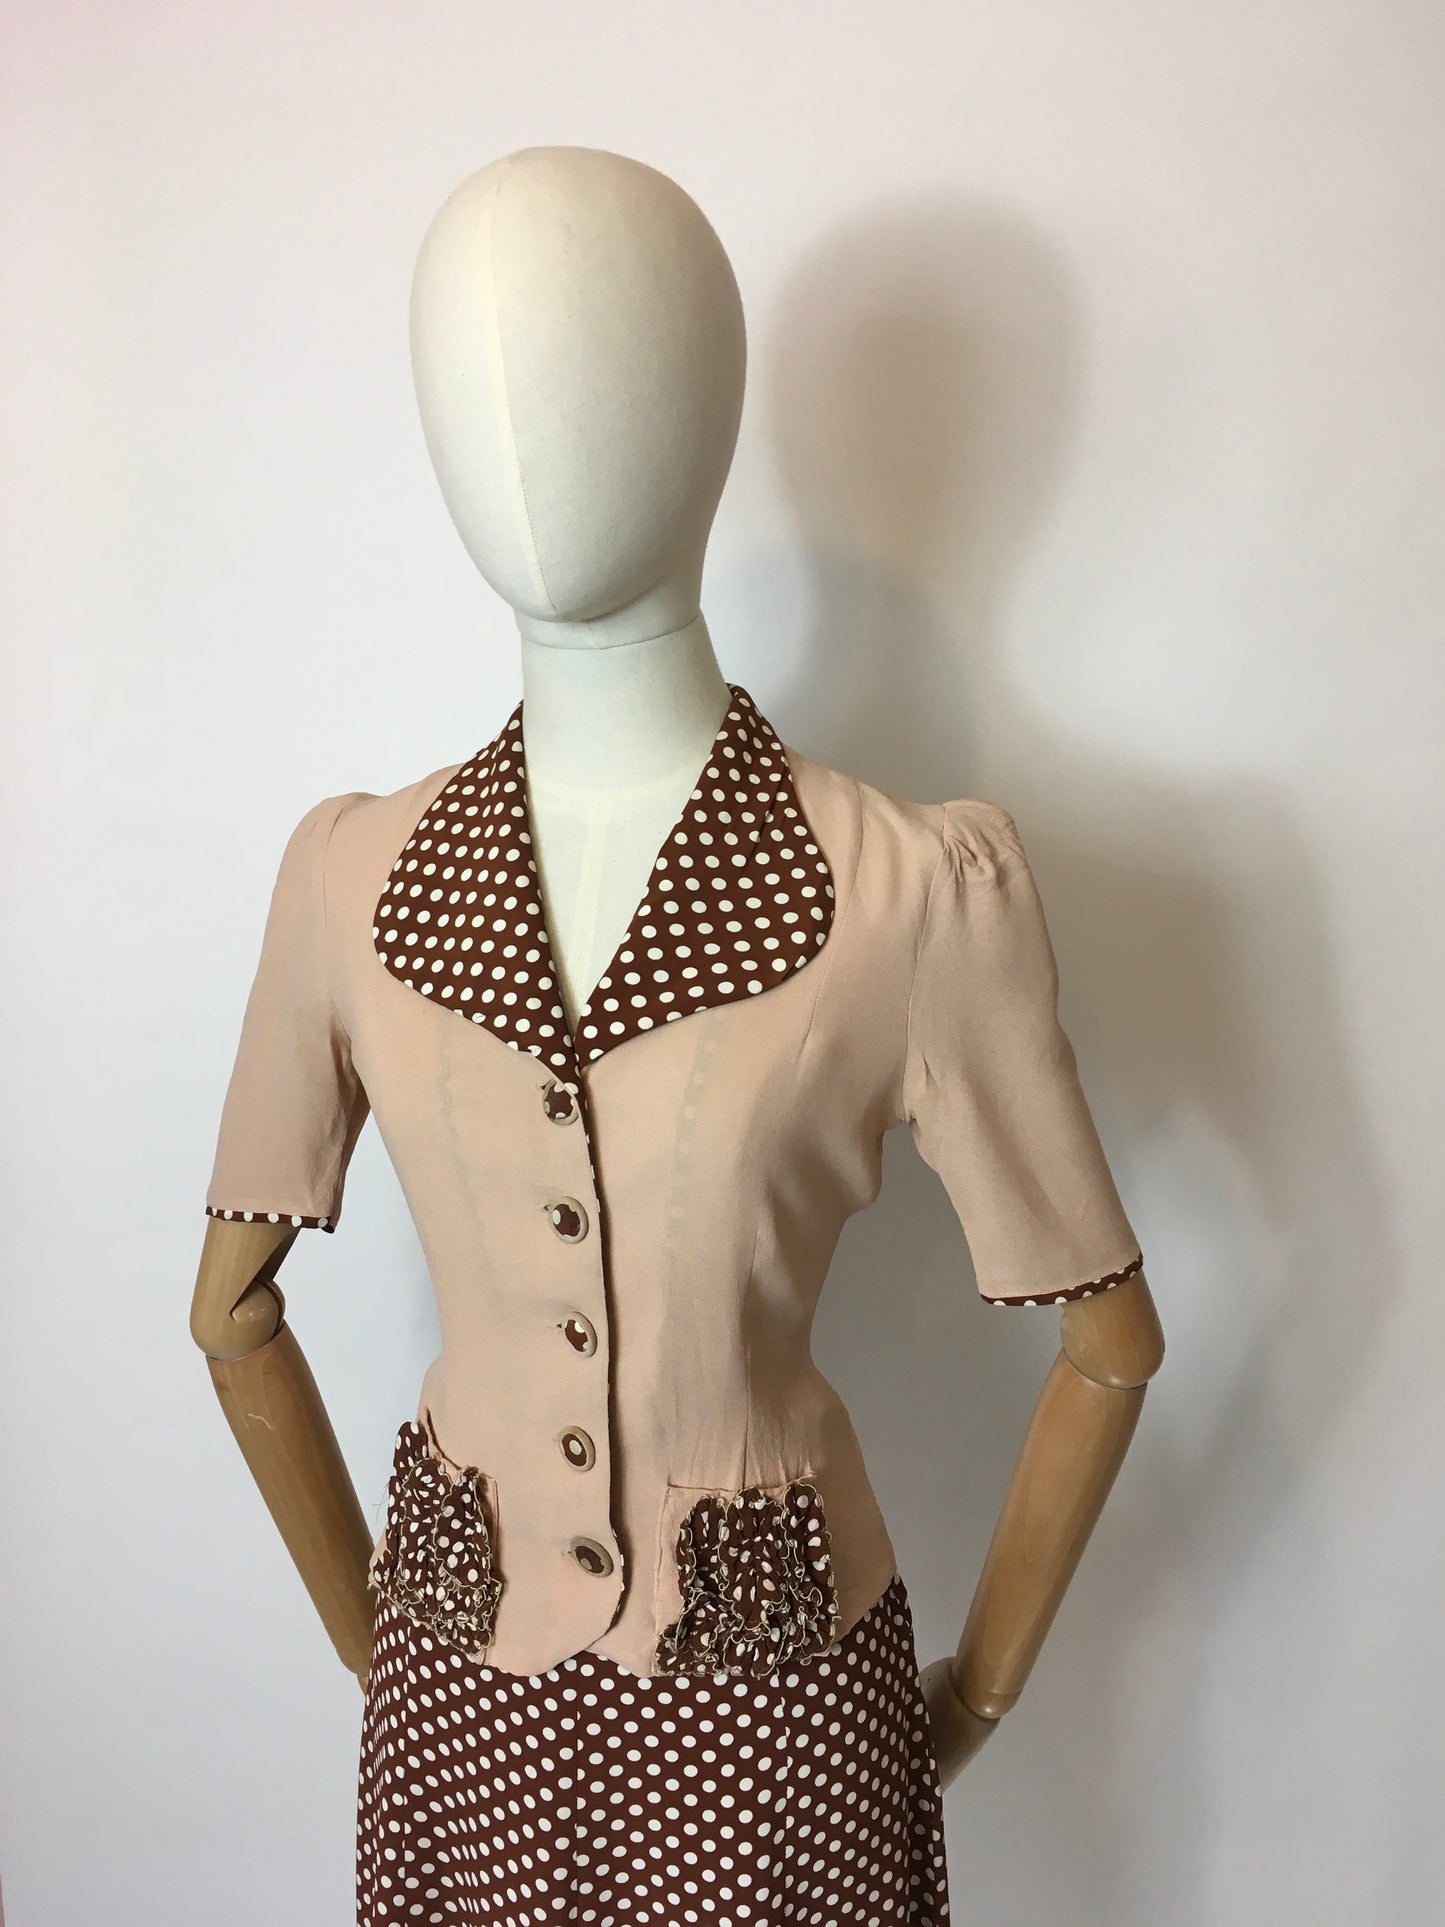 Original 1940’s Darling 2 pc Crepe Suit - In the Most Beautiful Contrast Blush Pink & Brown Polka Dot Crepe